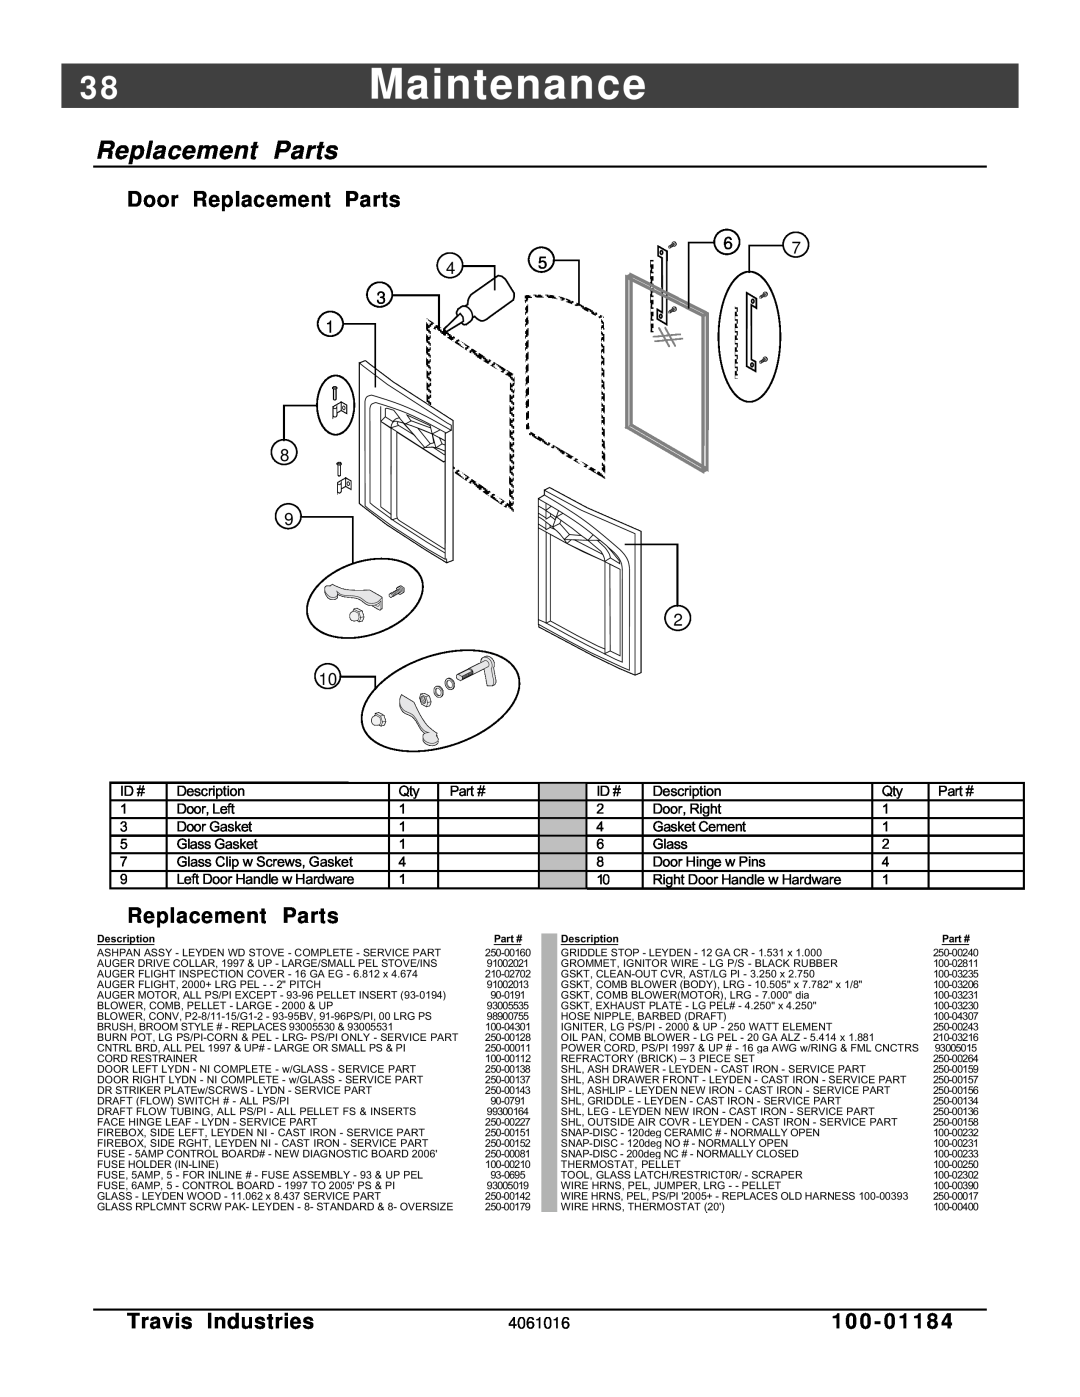 Lopi Leyden Pellet Stove manual 3 8Maintenance, Replacement Parts, Door Replacement, Travis Industries, 4061016 